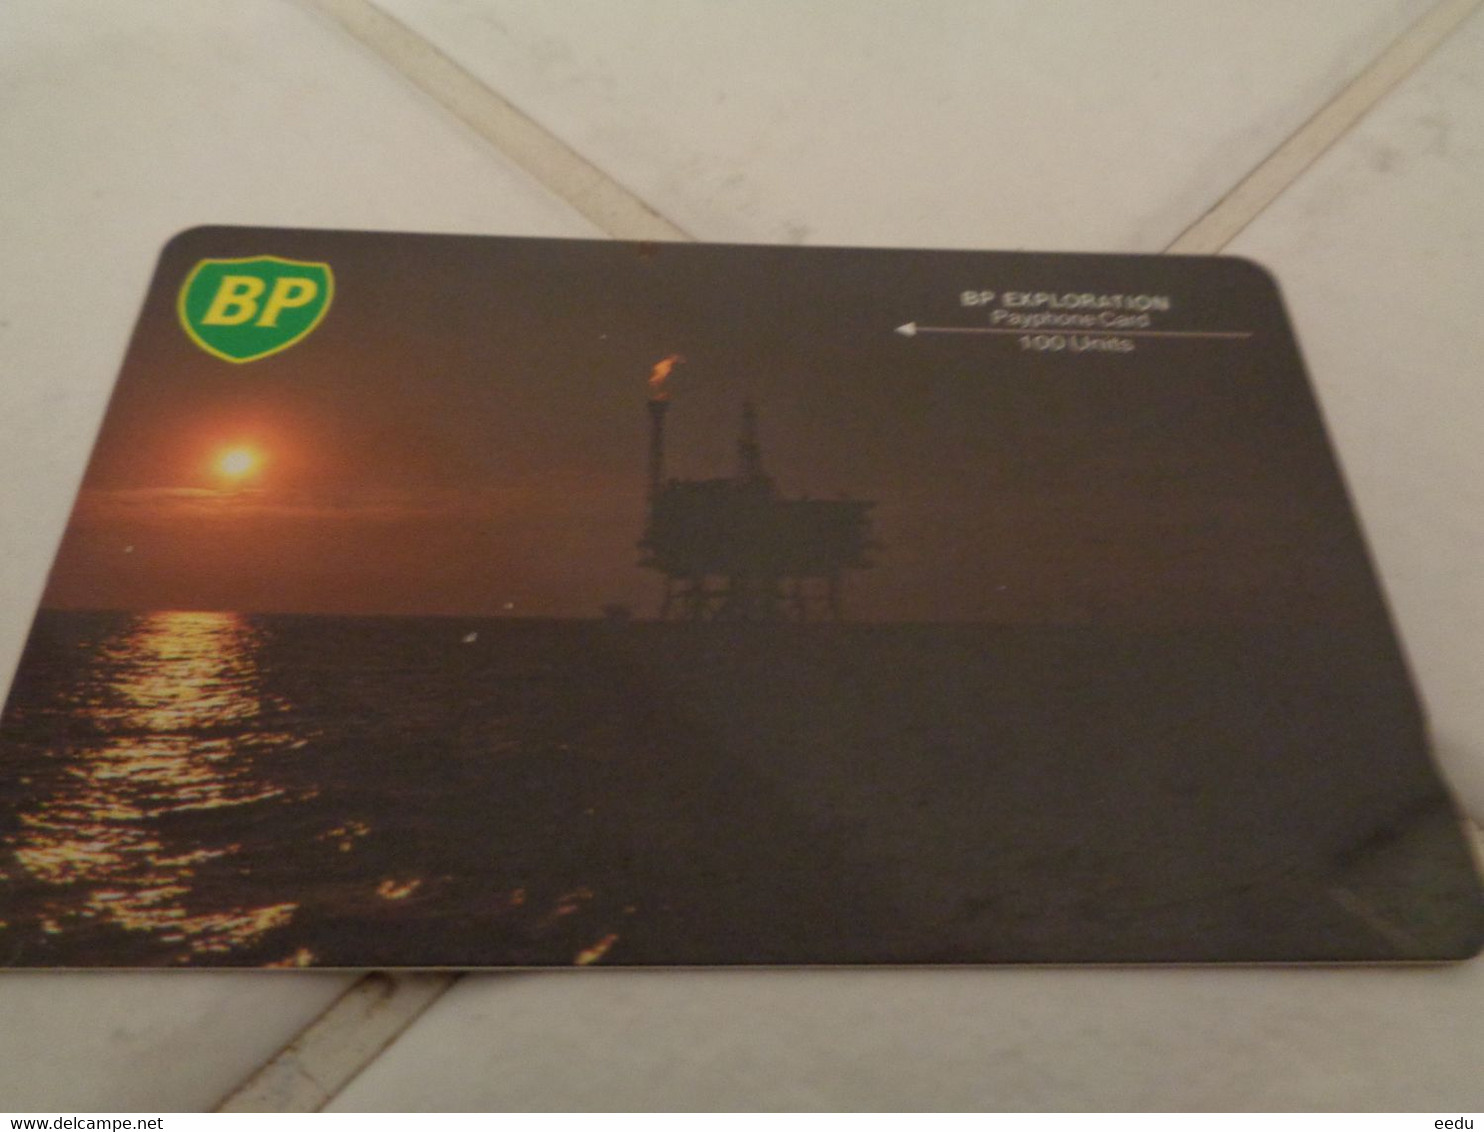 UK Phonecard - [ 2] Plataformas Petroleras